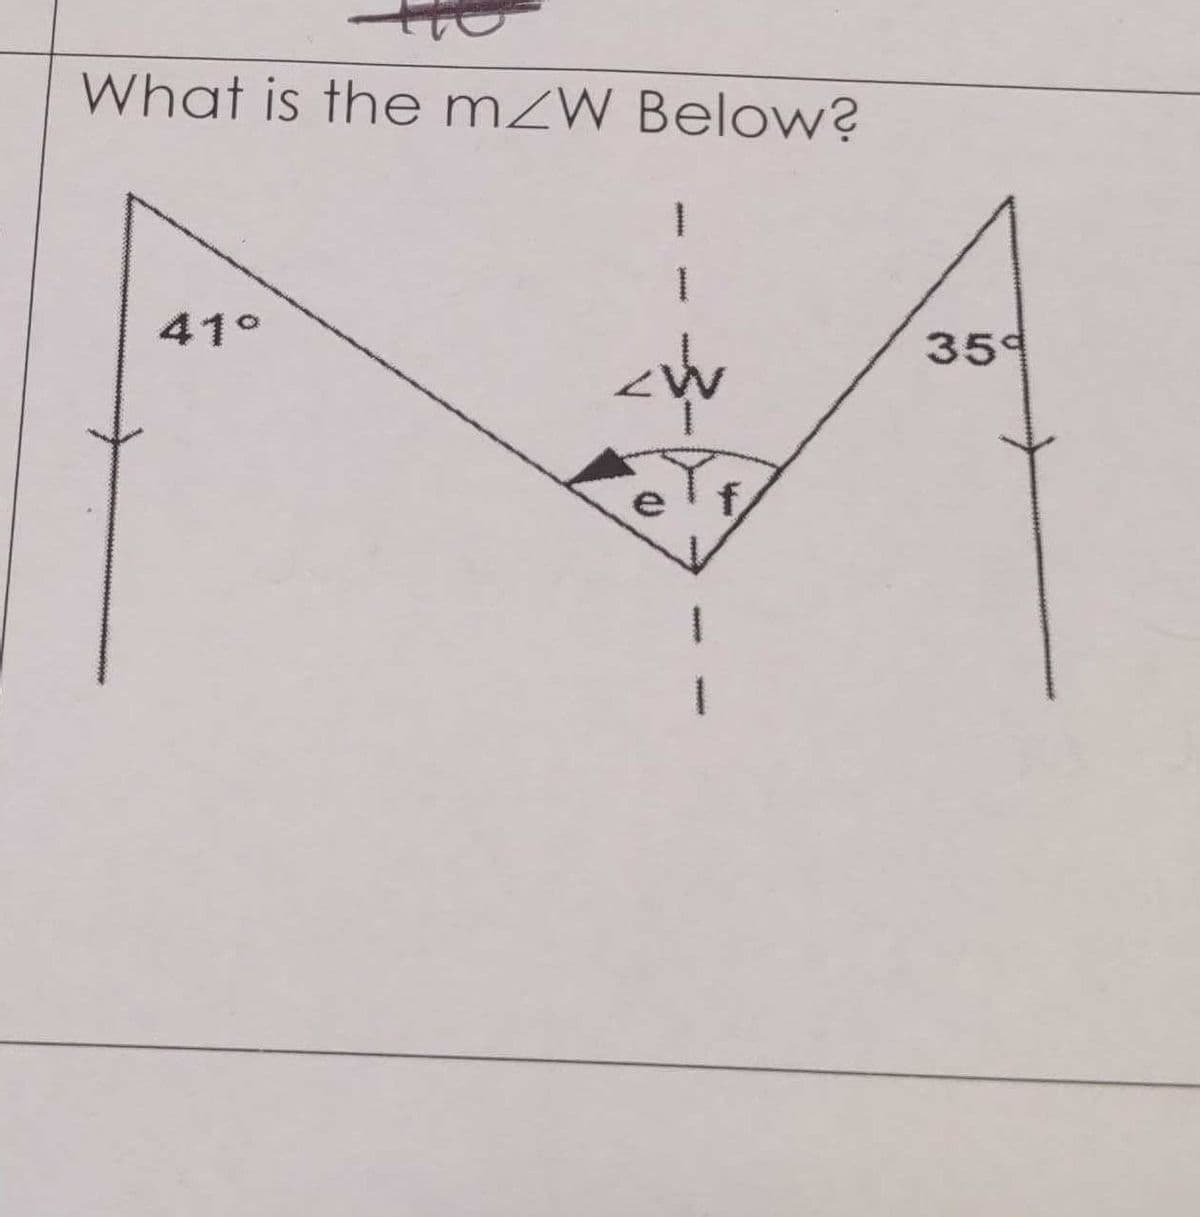 What is the m/W Below?
41°
1
<w
359